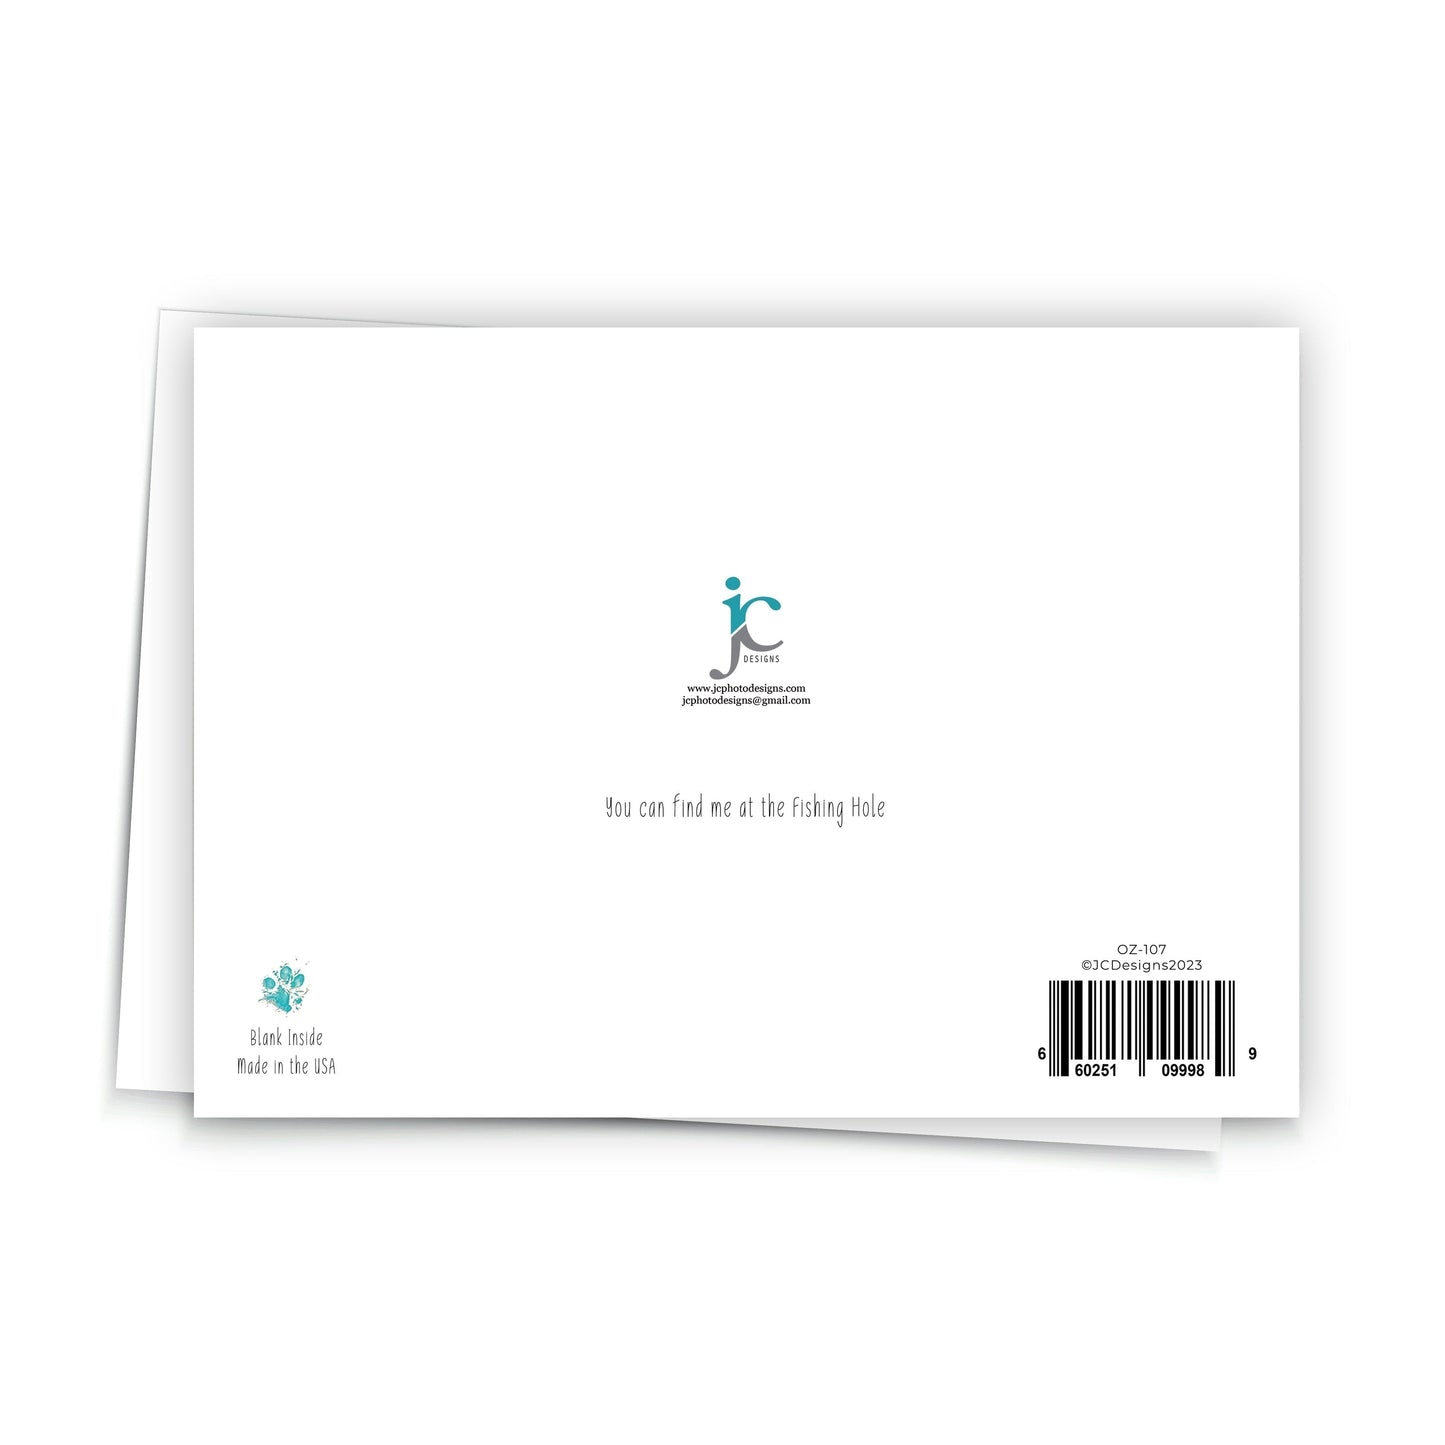 'Griffon Gone Fishing' - Brussels Griffon Angler Greeting Card - JC Designs